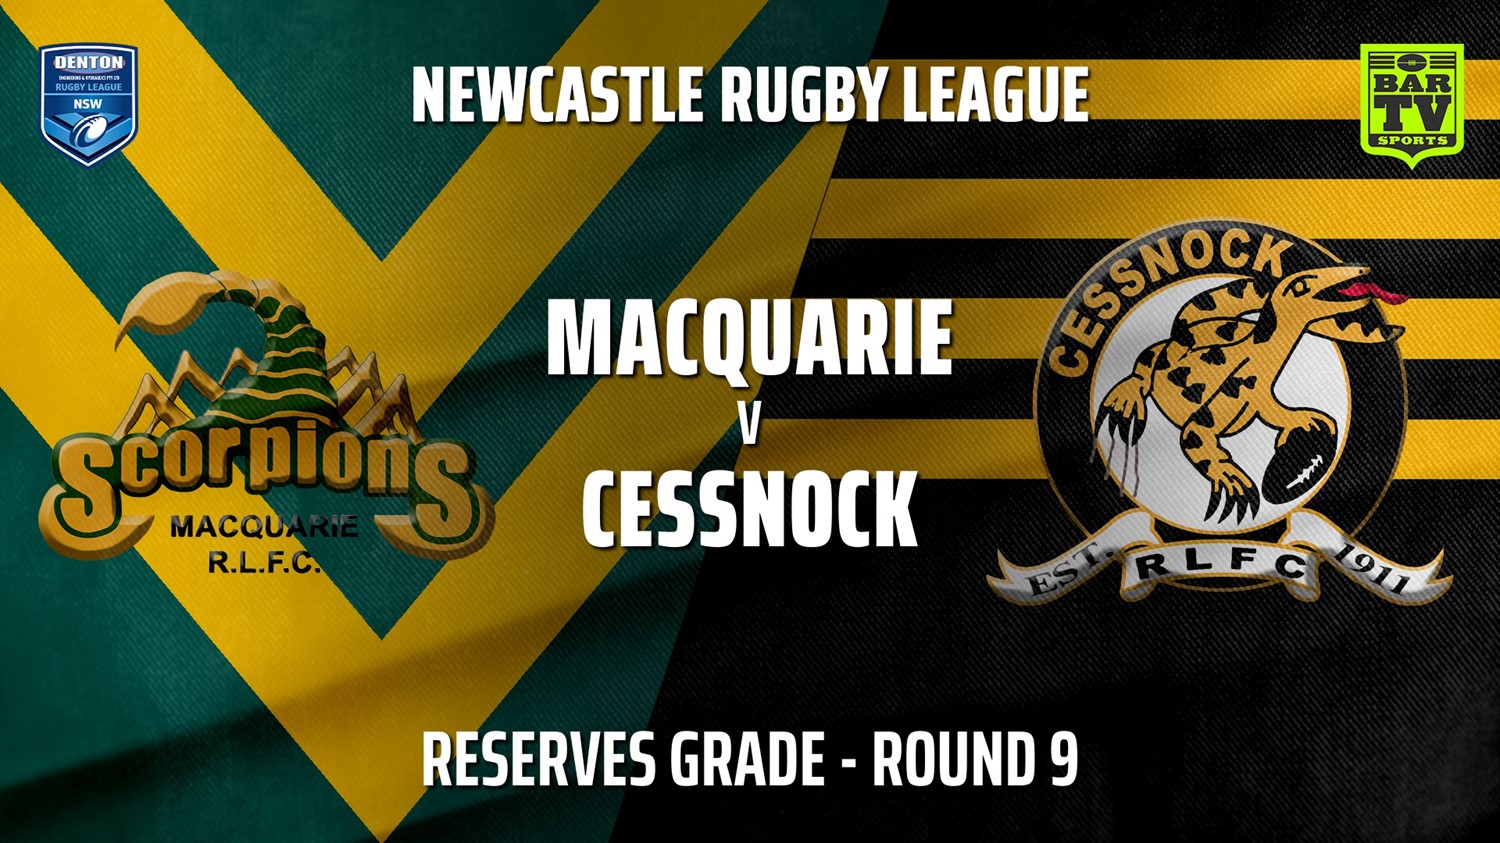 210529-Newcastle Rugby League Round 9 - Reserves Grade - Macquarie Scorpions v Cessnock Goannas Slate Image